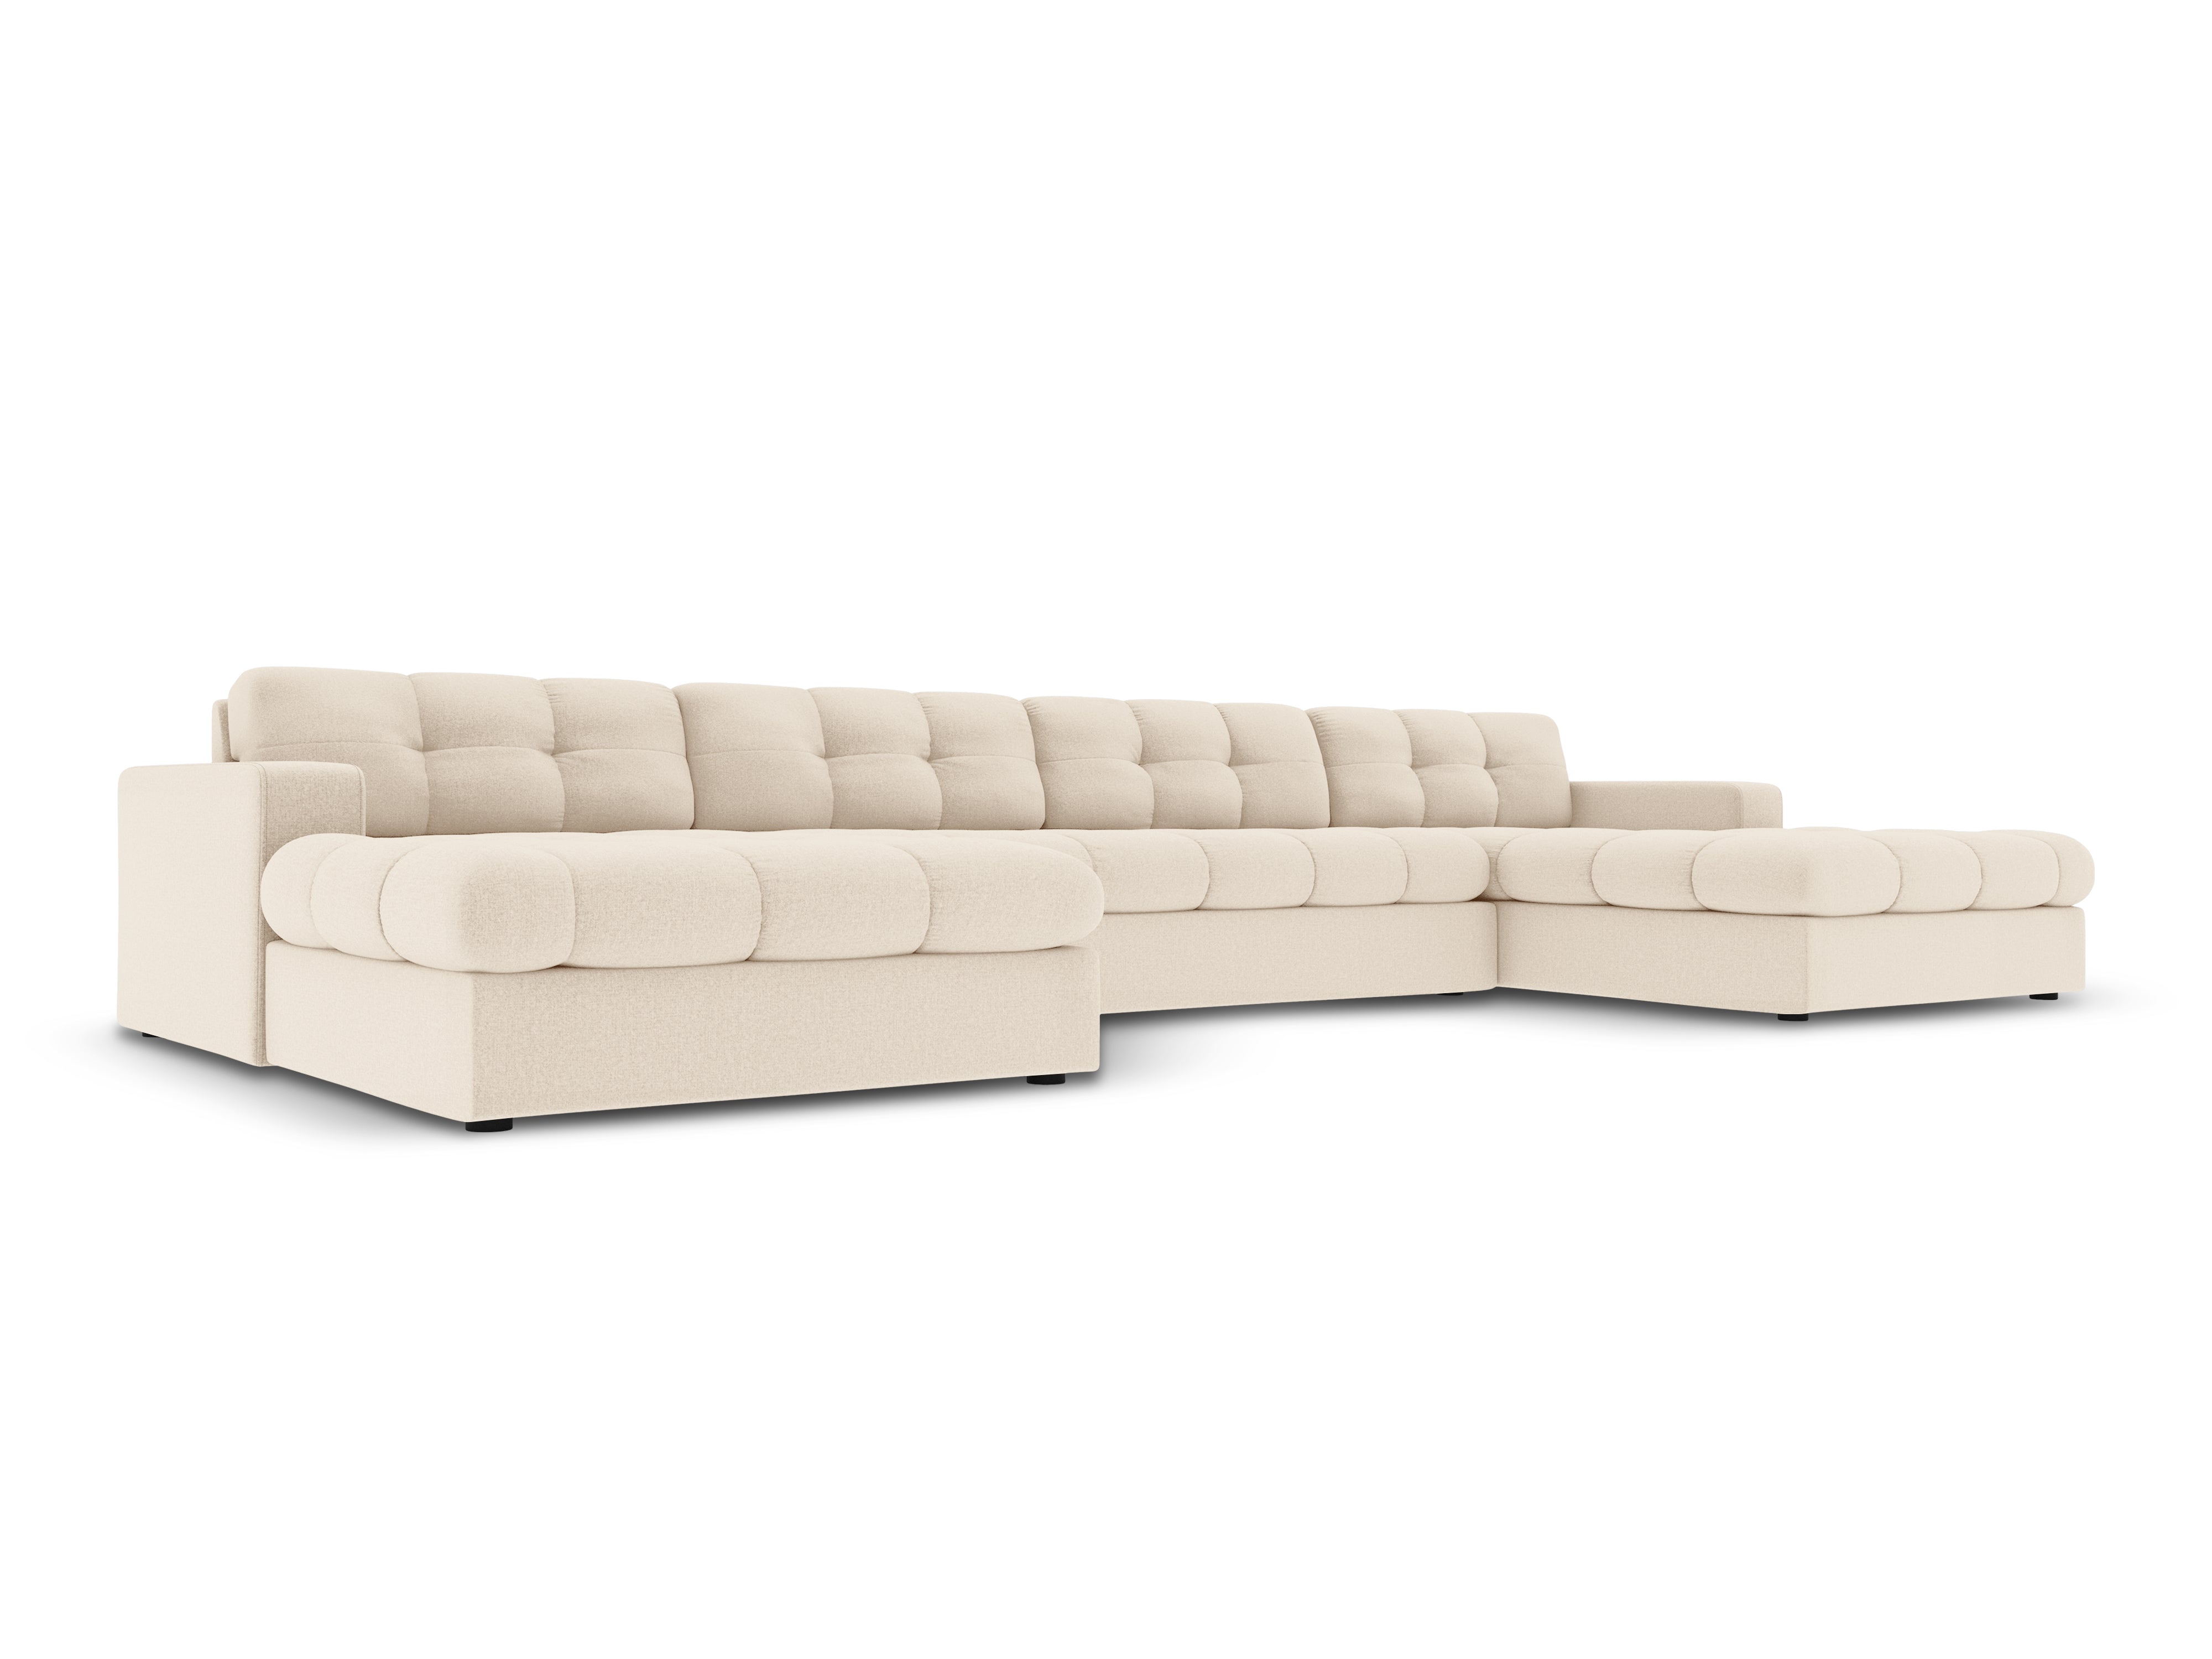 Panoramic Sofa, "Justin", 5 Seats, 294x160x72
Made in Europe, Micadoni, Eye on Design